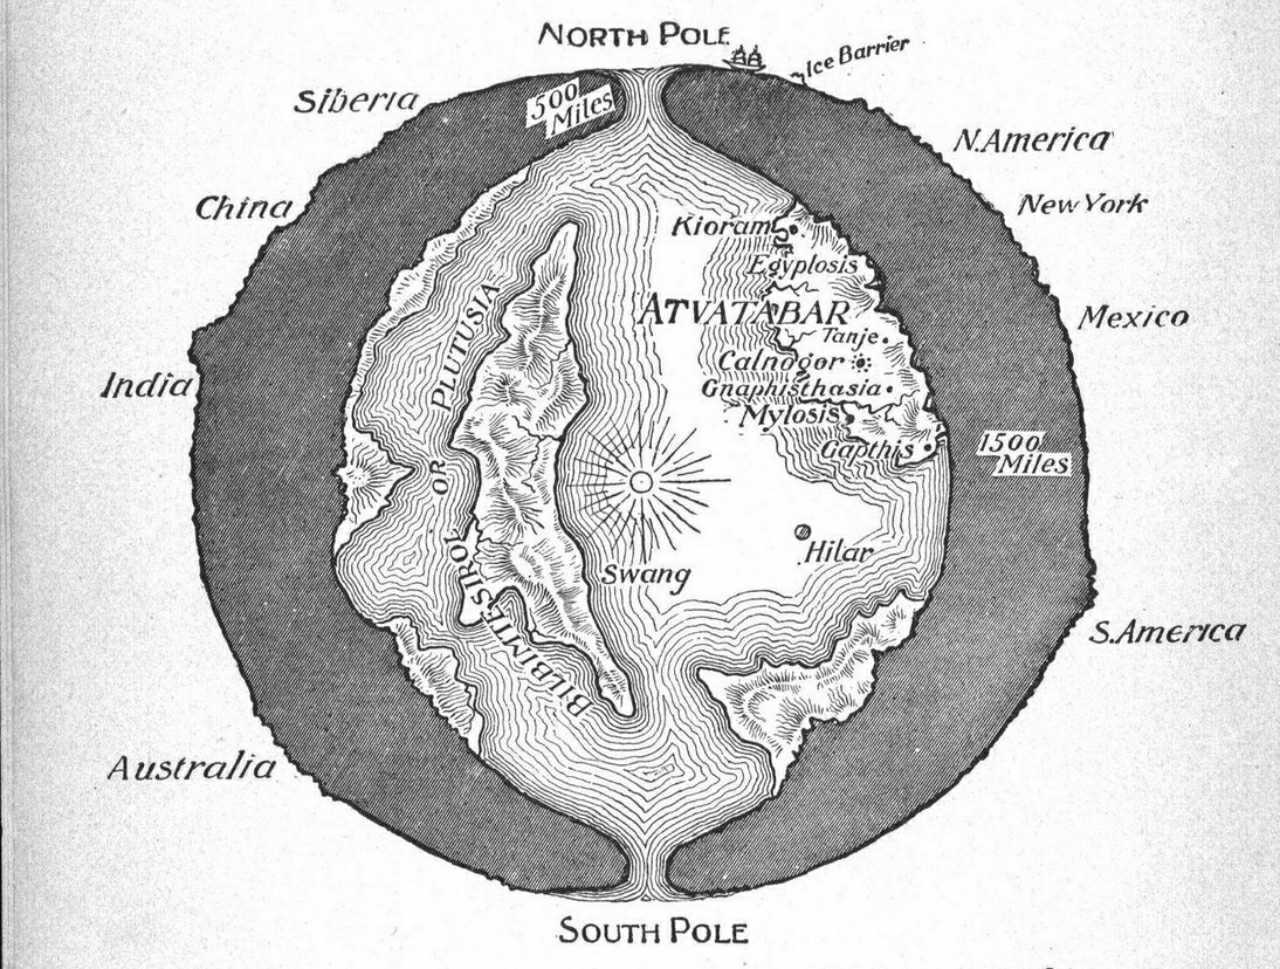 William R. Bradshaw의 1892년 공상과학 소설 The Goddess of Atvatabar에서 Atvatabar의 "내부 세계"를 보여주는 행성 지구의 단면도